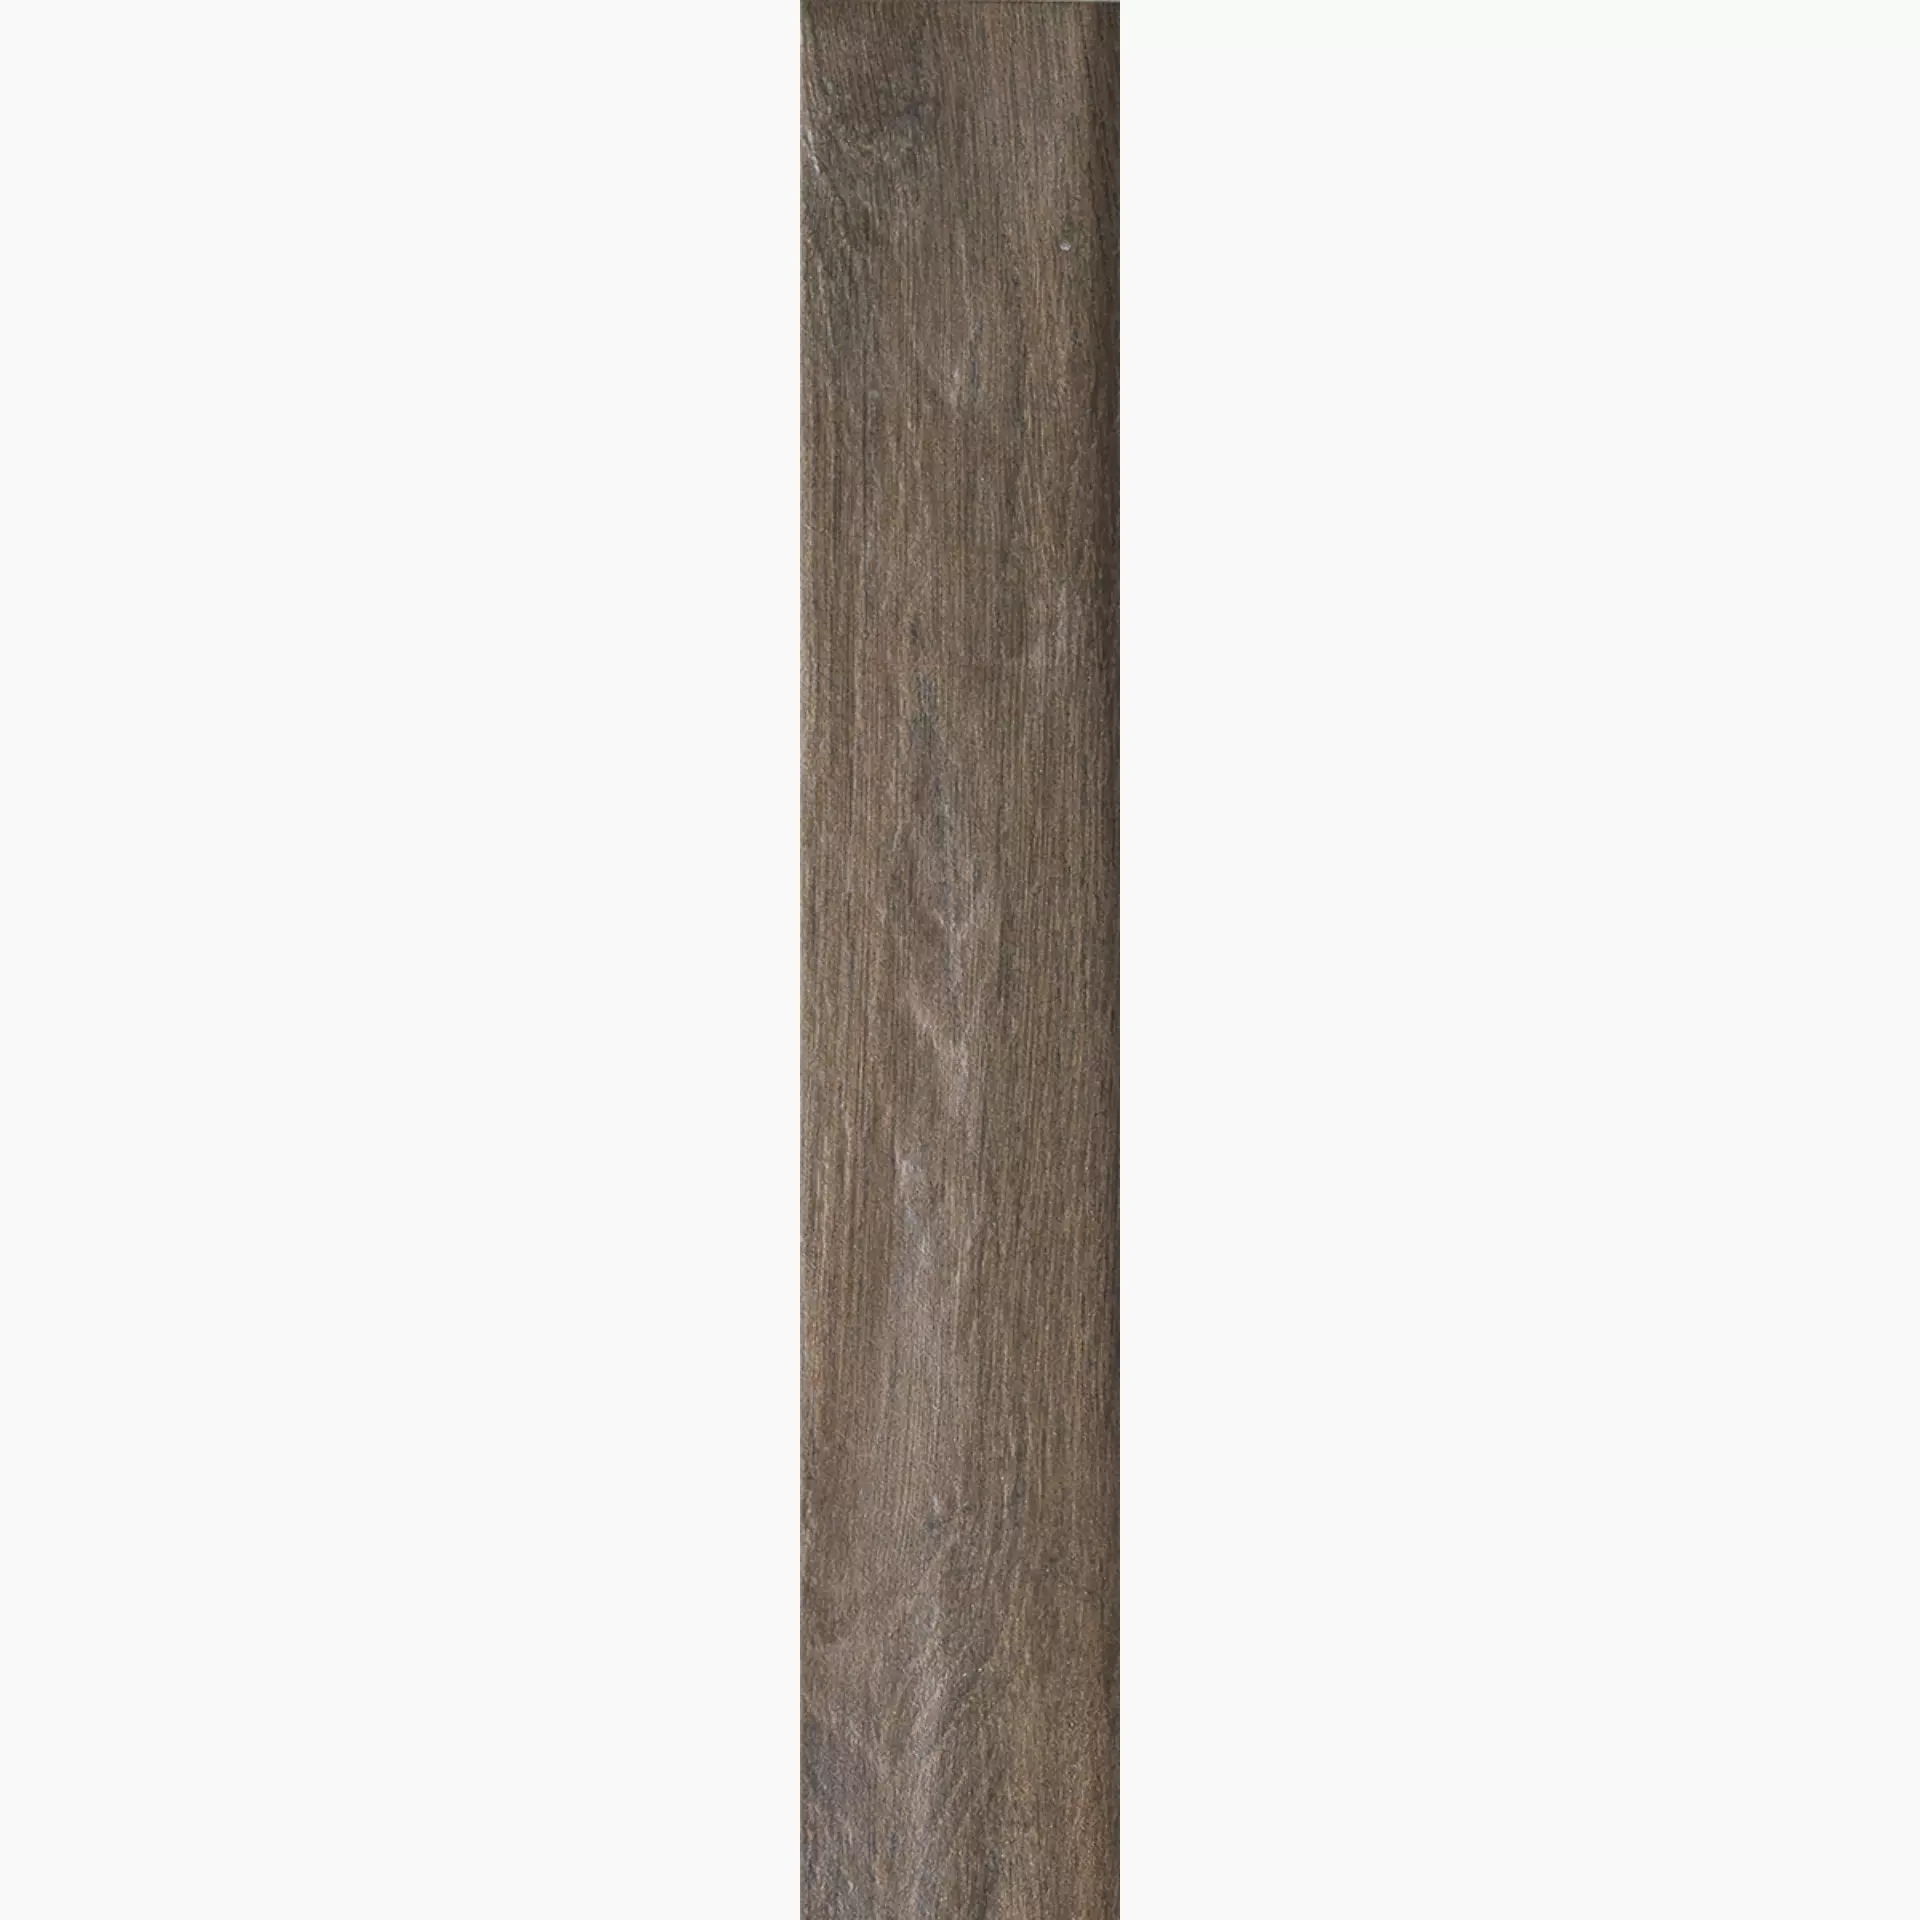 Rondine Vintage Brune Naturale J86579 7,5x45cm 8,5mm